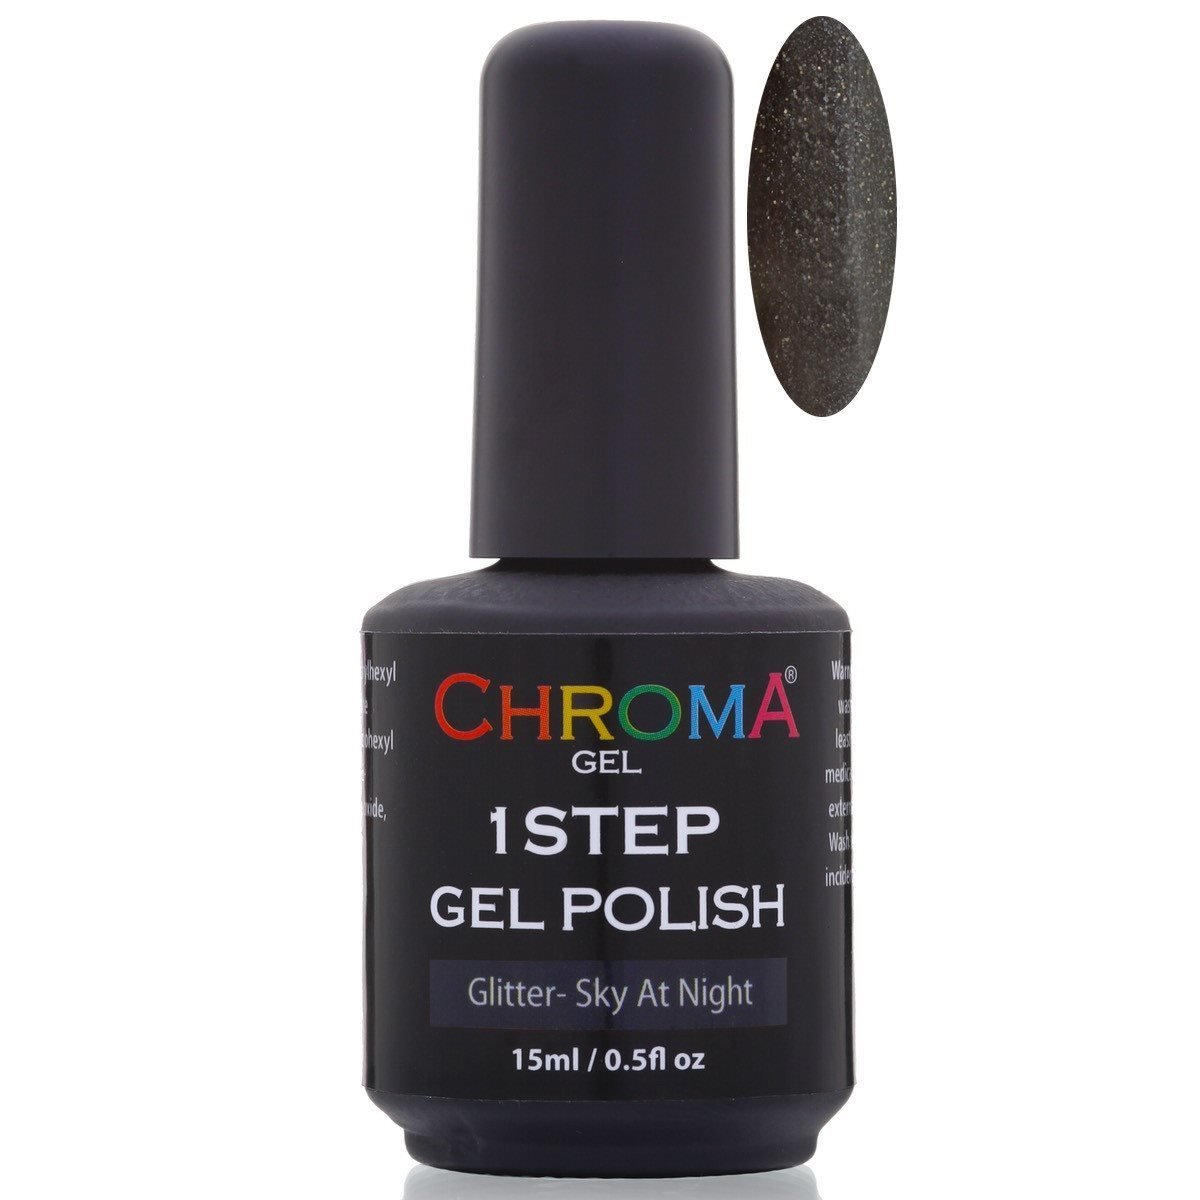 Chroma Gel 1 Step Gel Polish - Sky At Night No.20 - beautyhair.co.ukChroma Gel